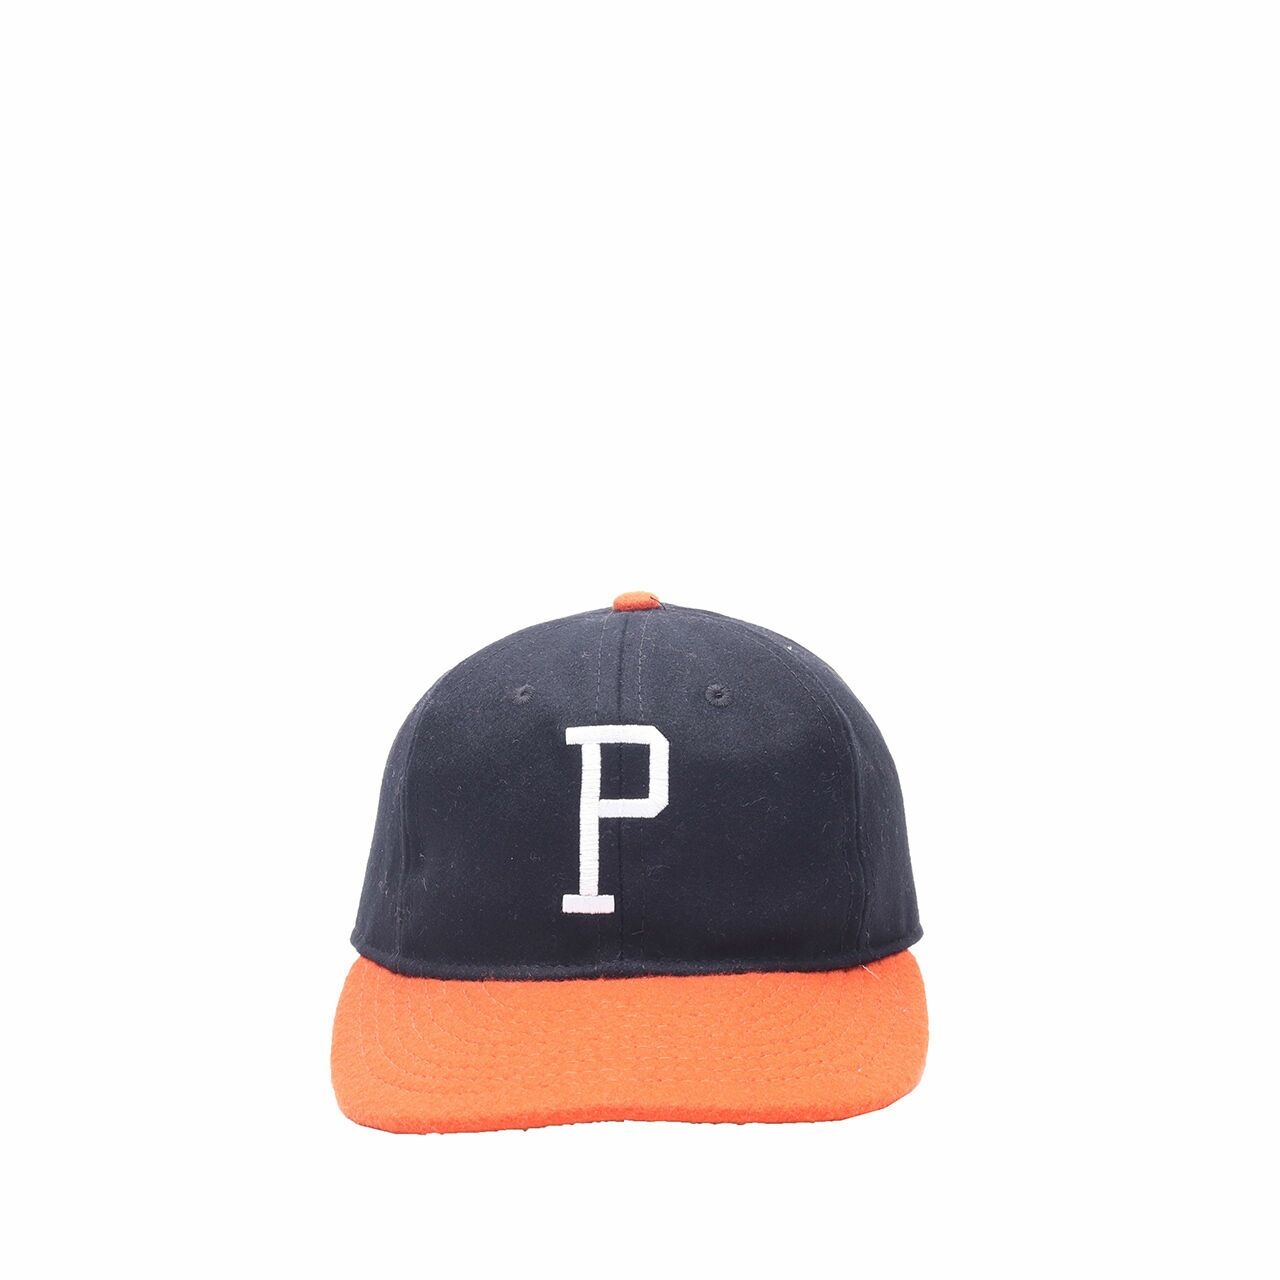 Ebbet Field Flannels Black Orange Vintage Ballcap Hats